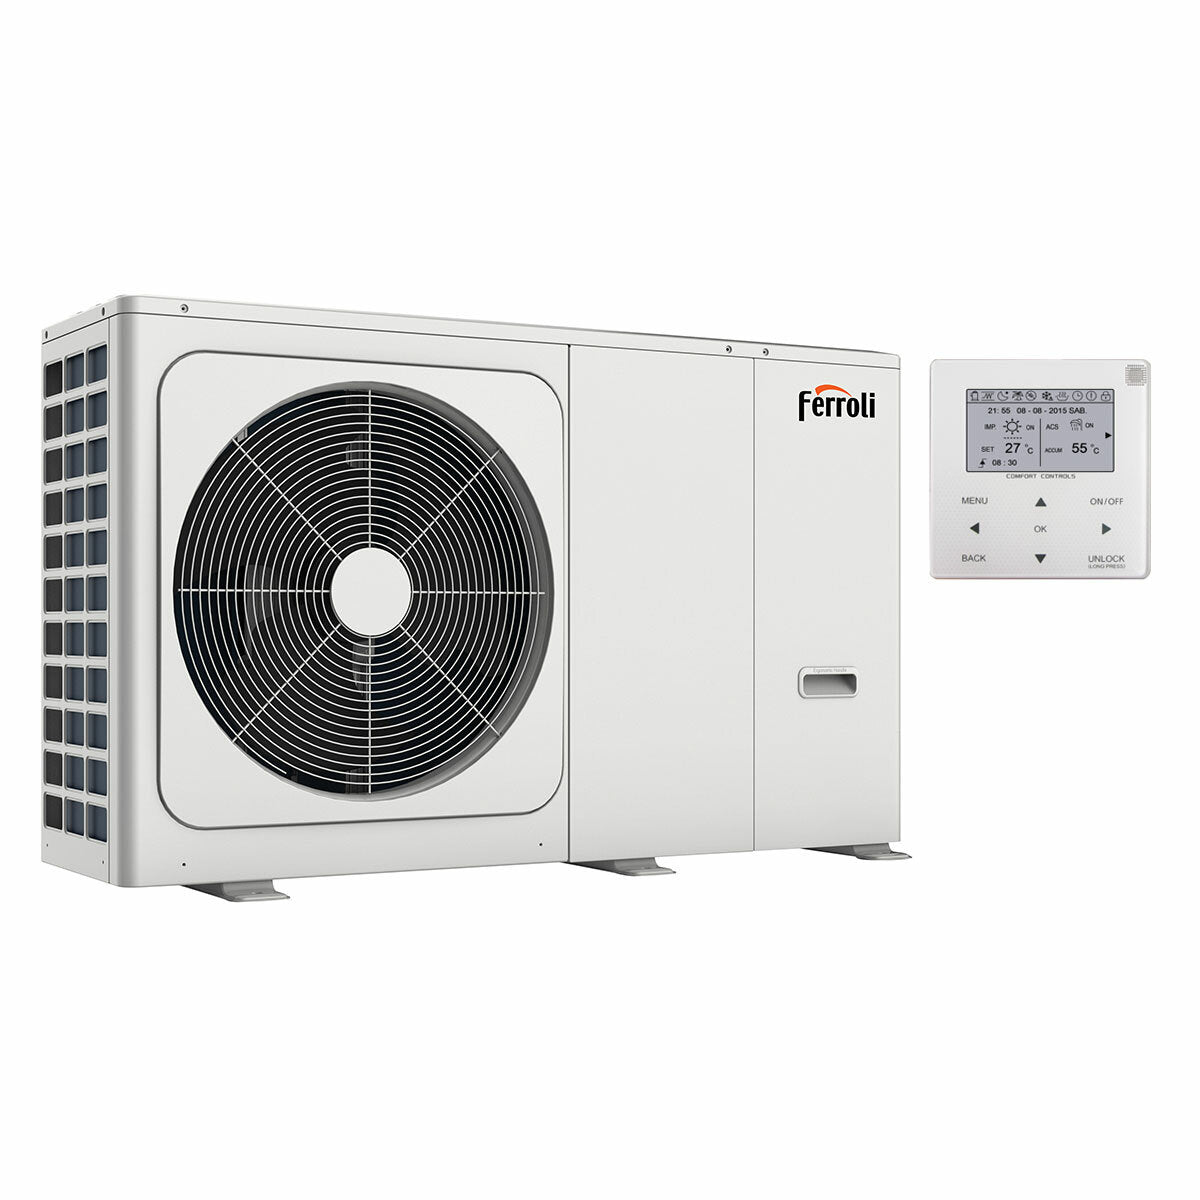 Ferroli Omnia M 3.2 8.4 kW air-water heat pump monobloc single-phase inverter R32 A++